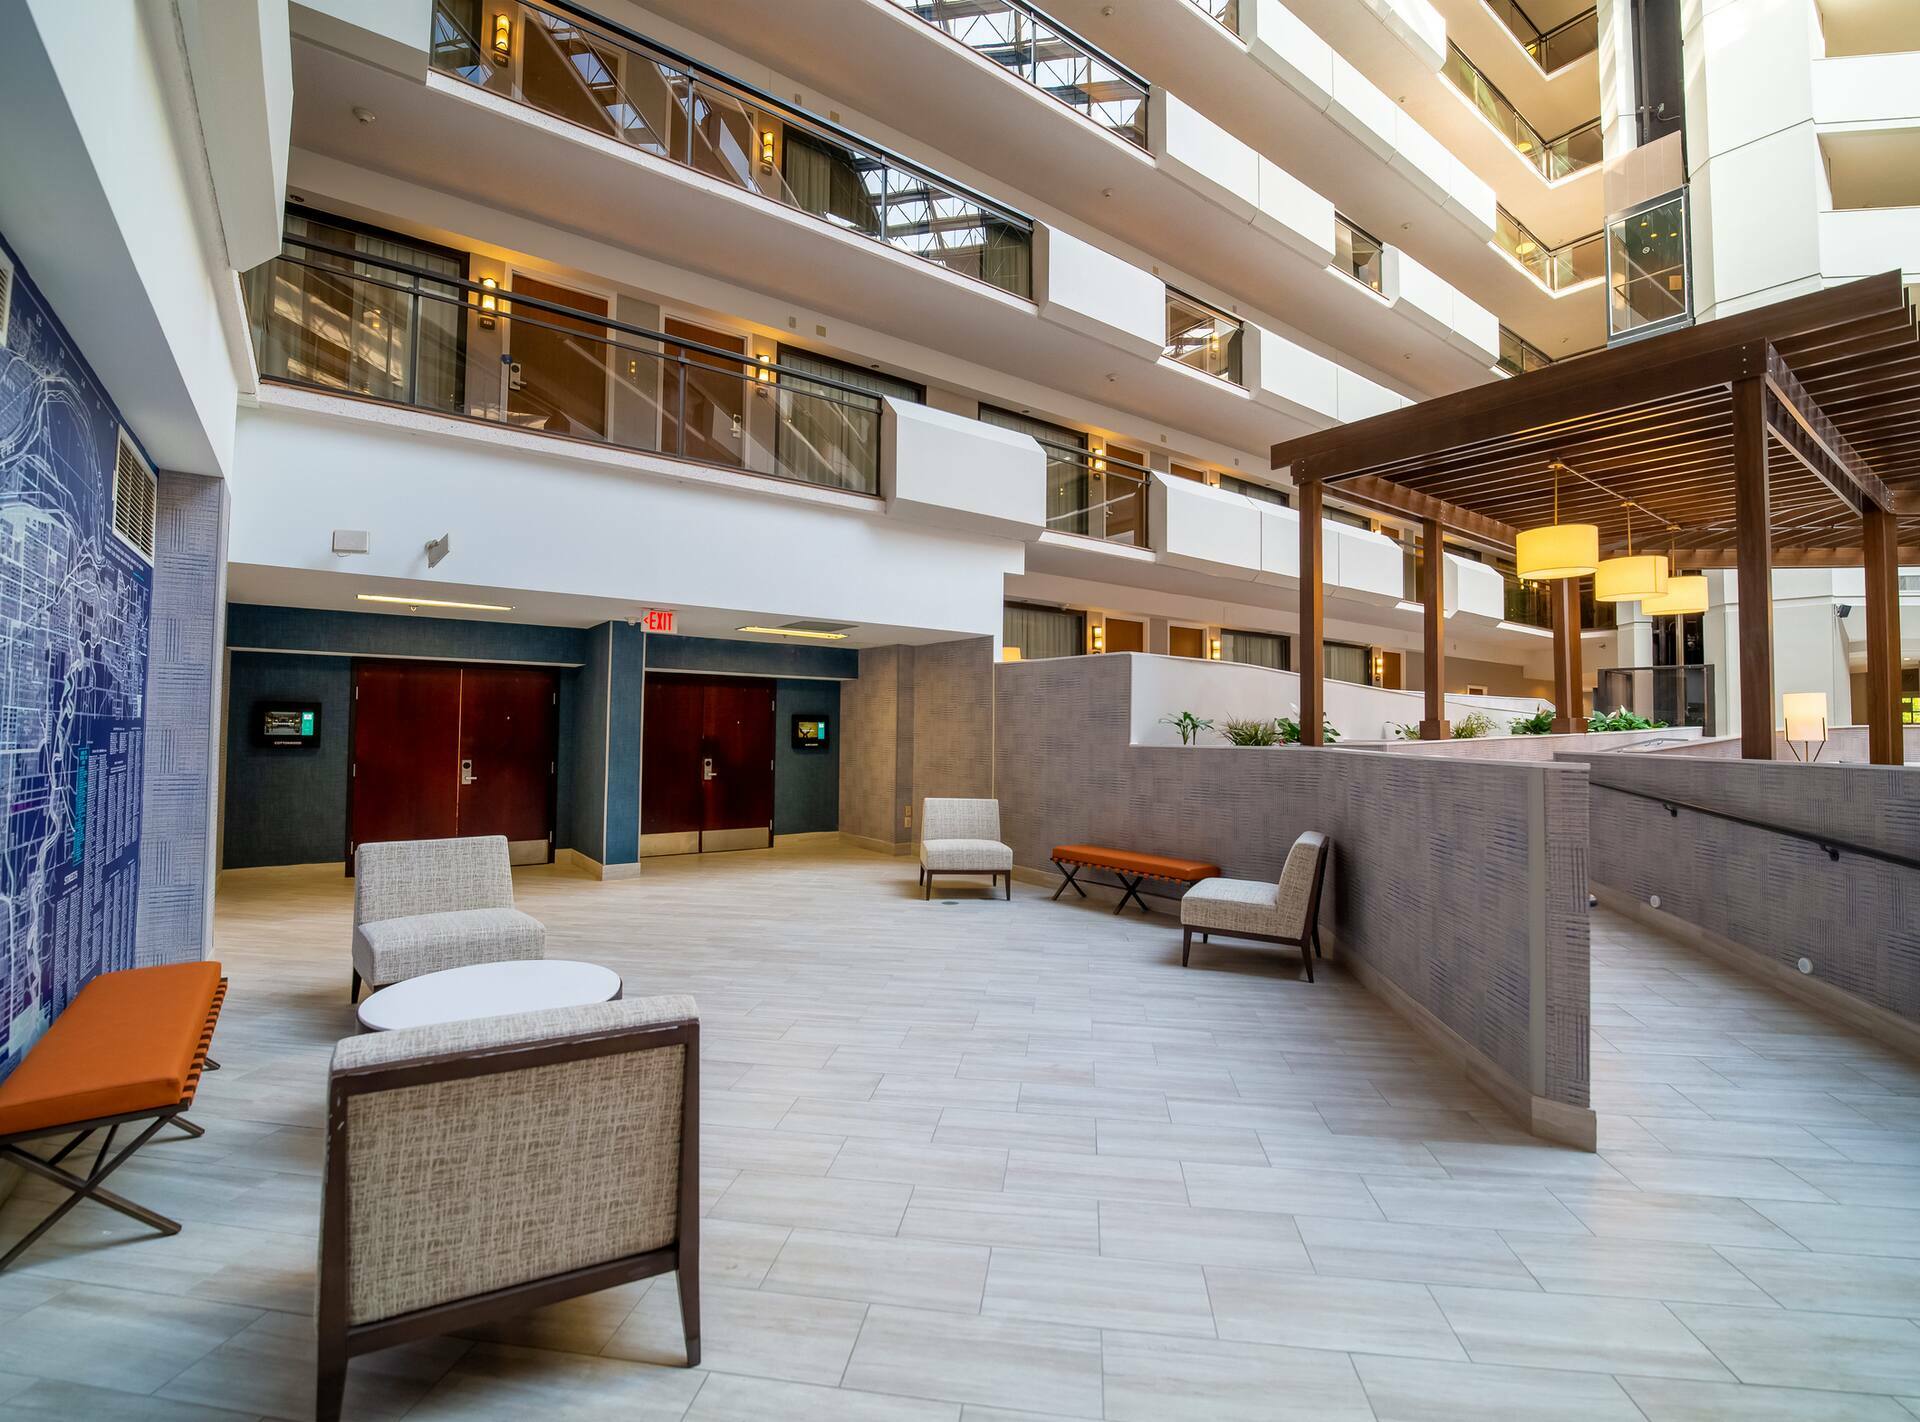 Photo of Embassy Suites by Hilton Kansas City Overland Park, Overland Park, KS